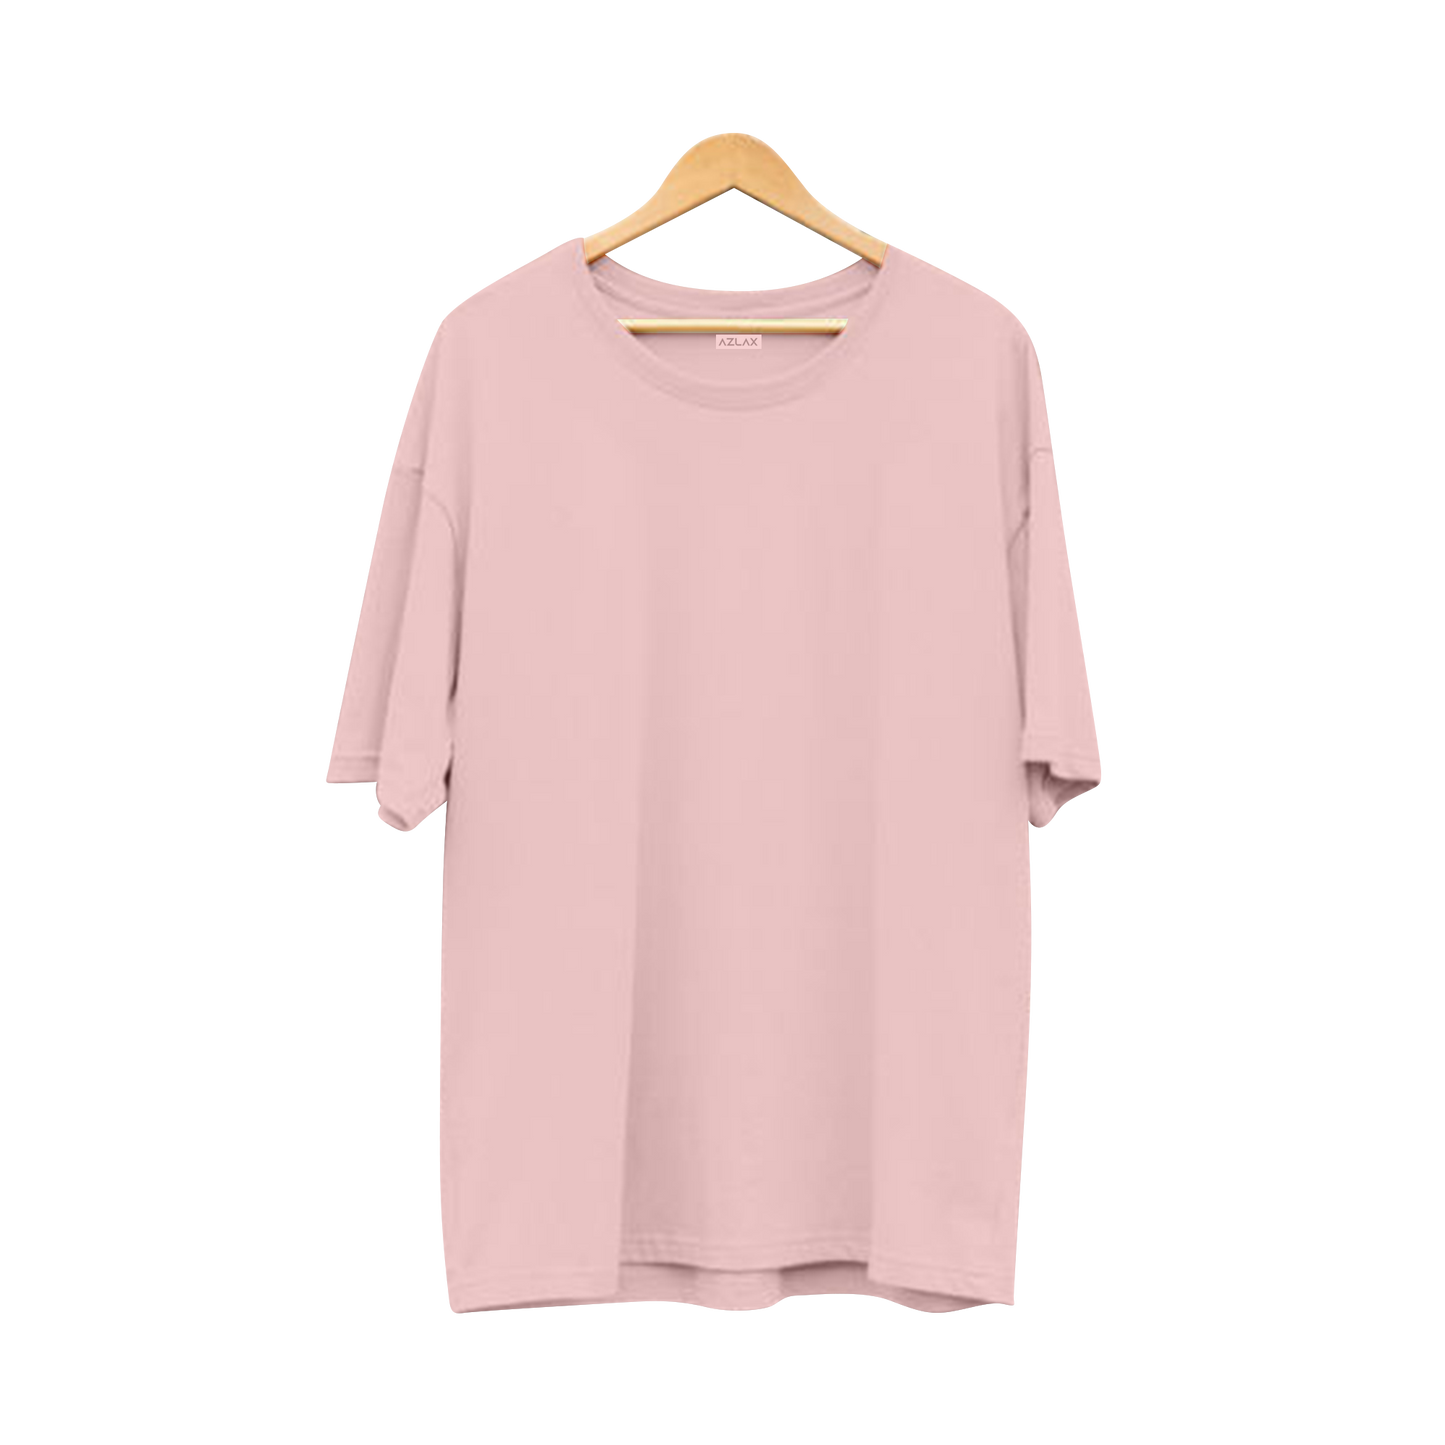 Azlax Light Pink 100% Cotton Unisex Tshirts